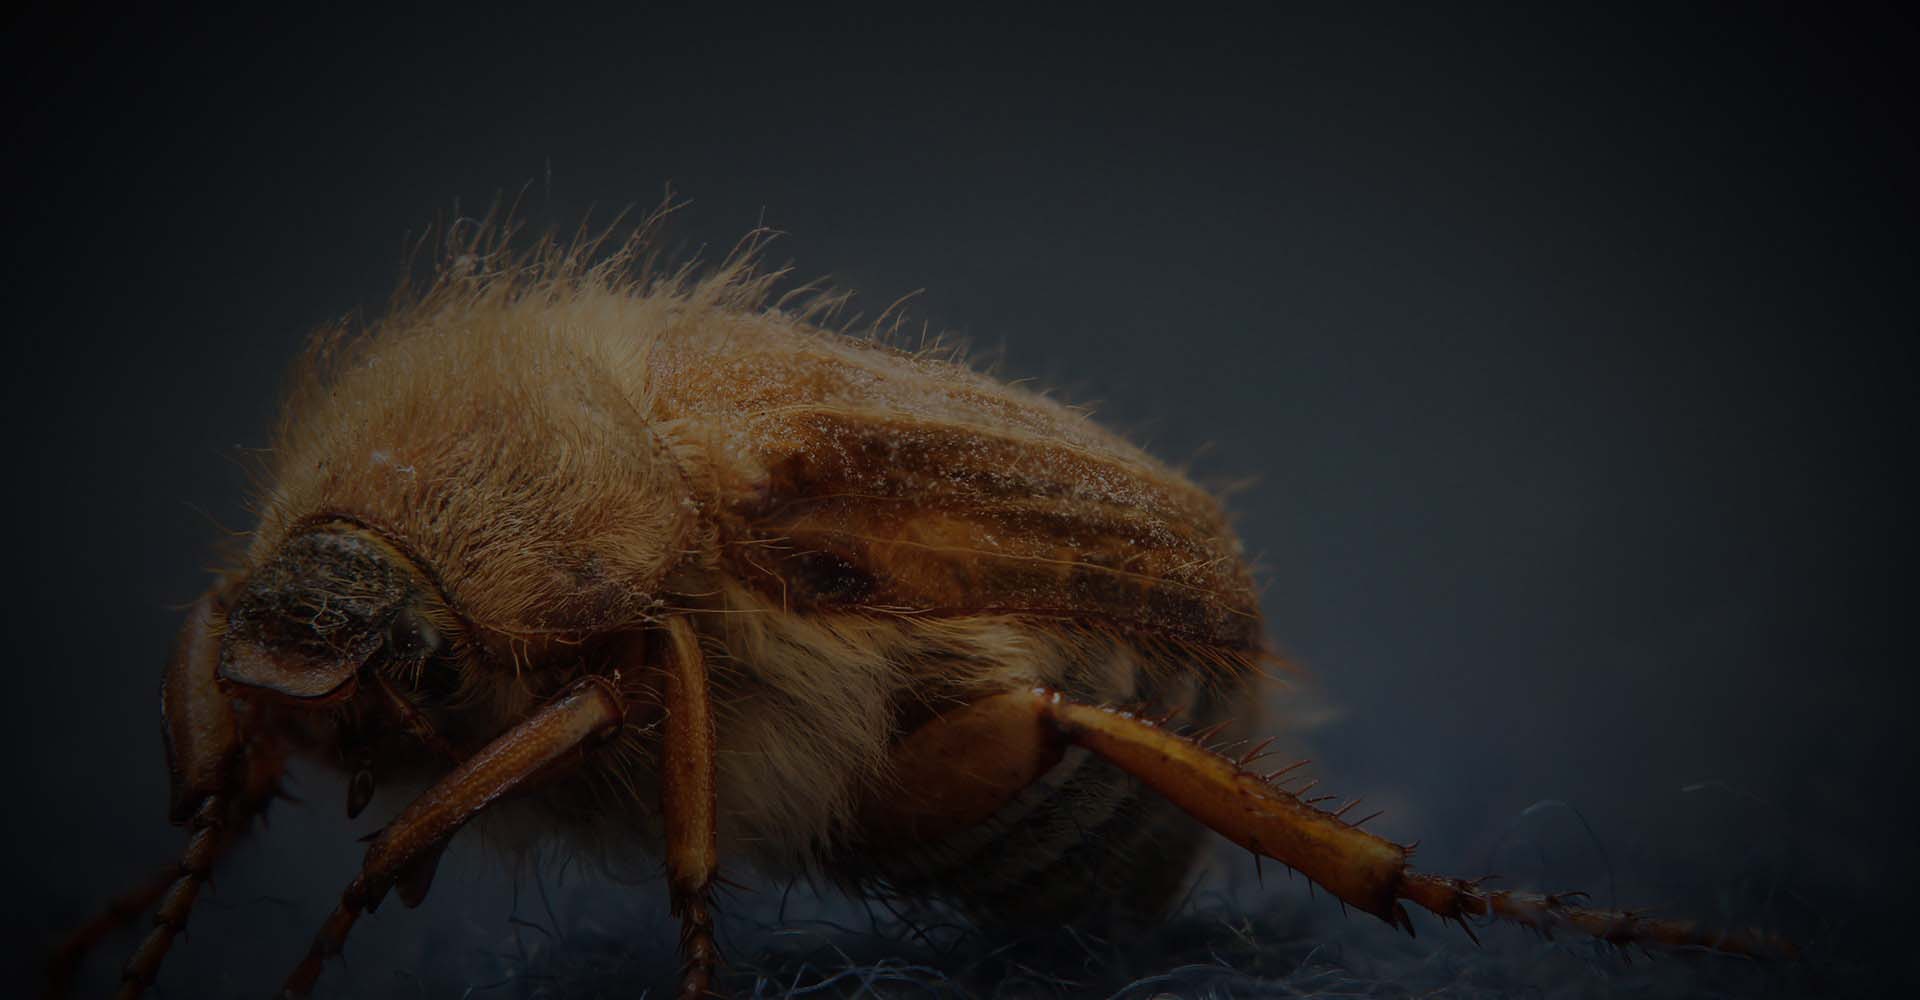 https://safespraypestcontrol.com.au/images/services20/carpet-beetle-pest-control.jpg